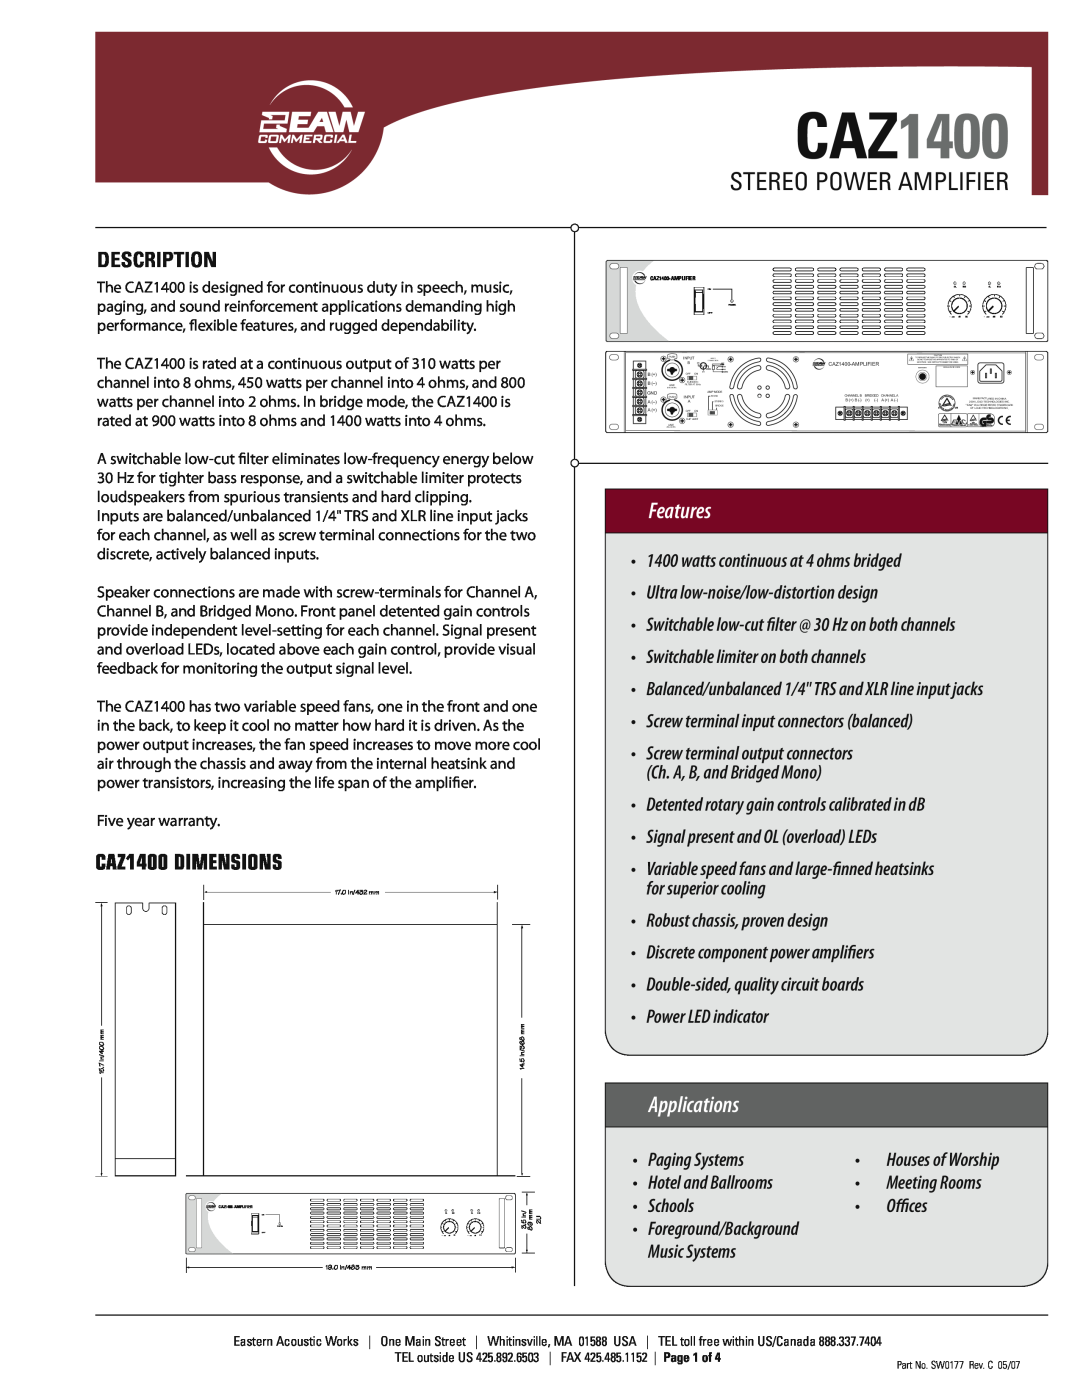 EAW SW0177 warranty Stereo Power Amplifier, Description, CAZ1400 Dimensions, Features, Applications 